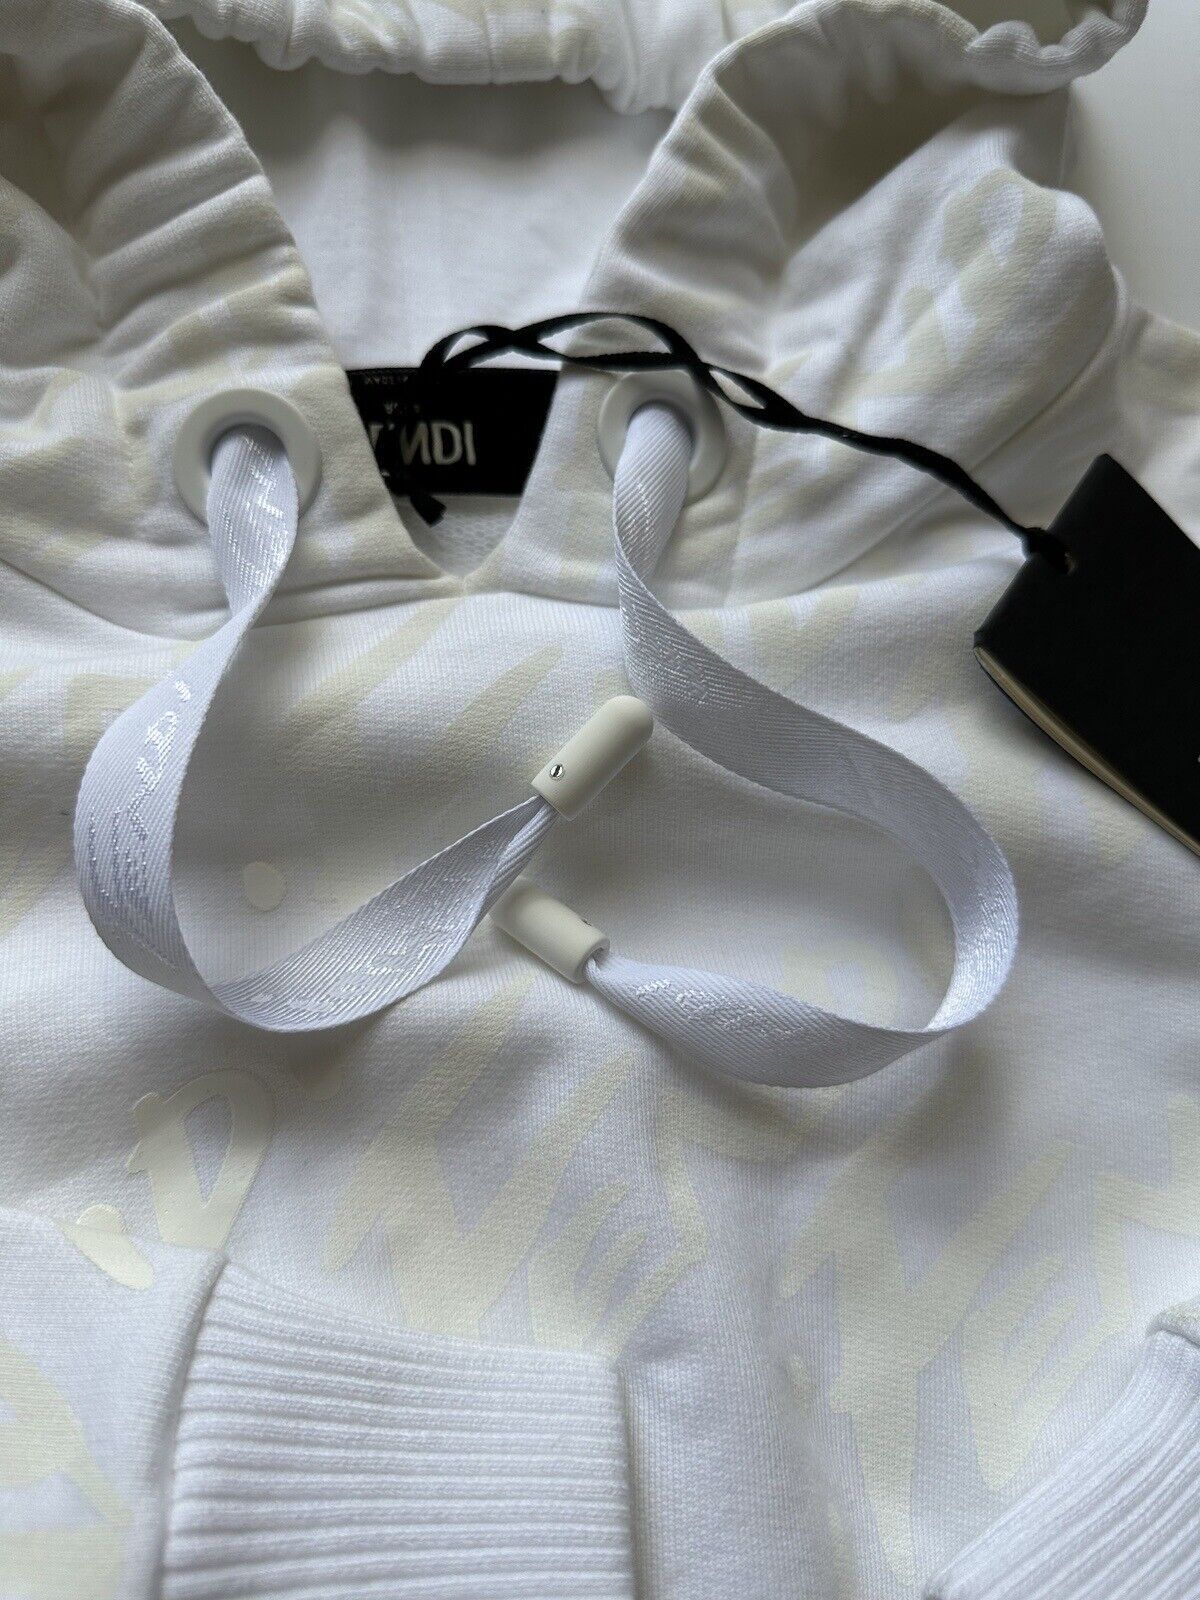 NWT $1100 Fendi Women's Milk White Fendi Knit Jacket with Hoodie 6 US (42 Eu) IT